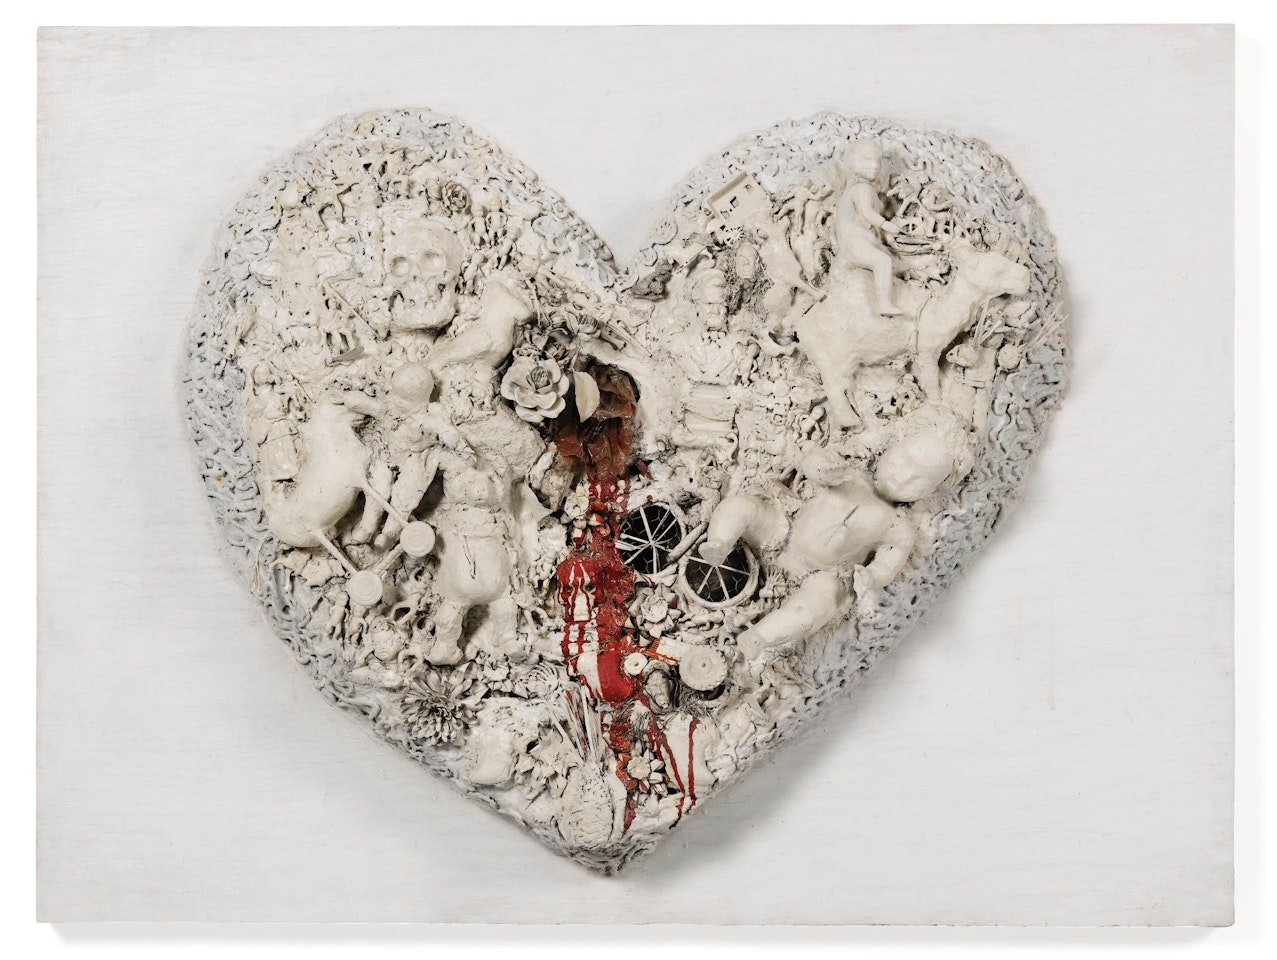 COEUR N° 1 (HEART N° 1) by Niki de Saint Phalle